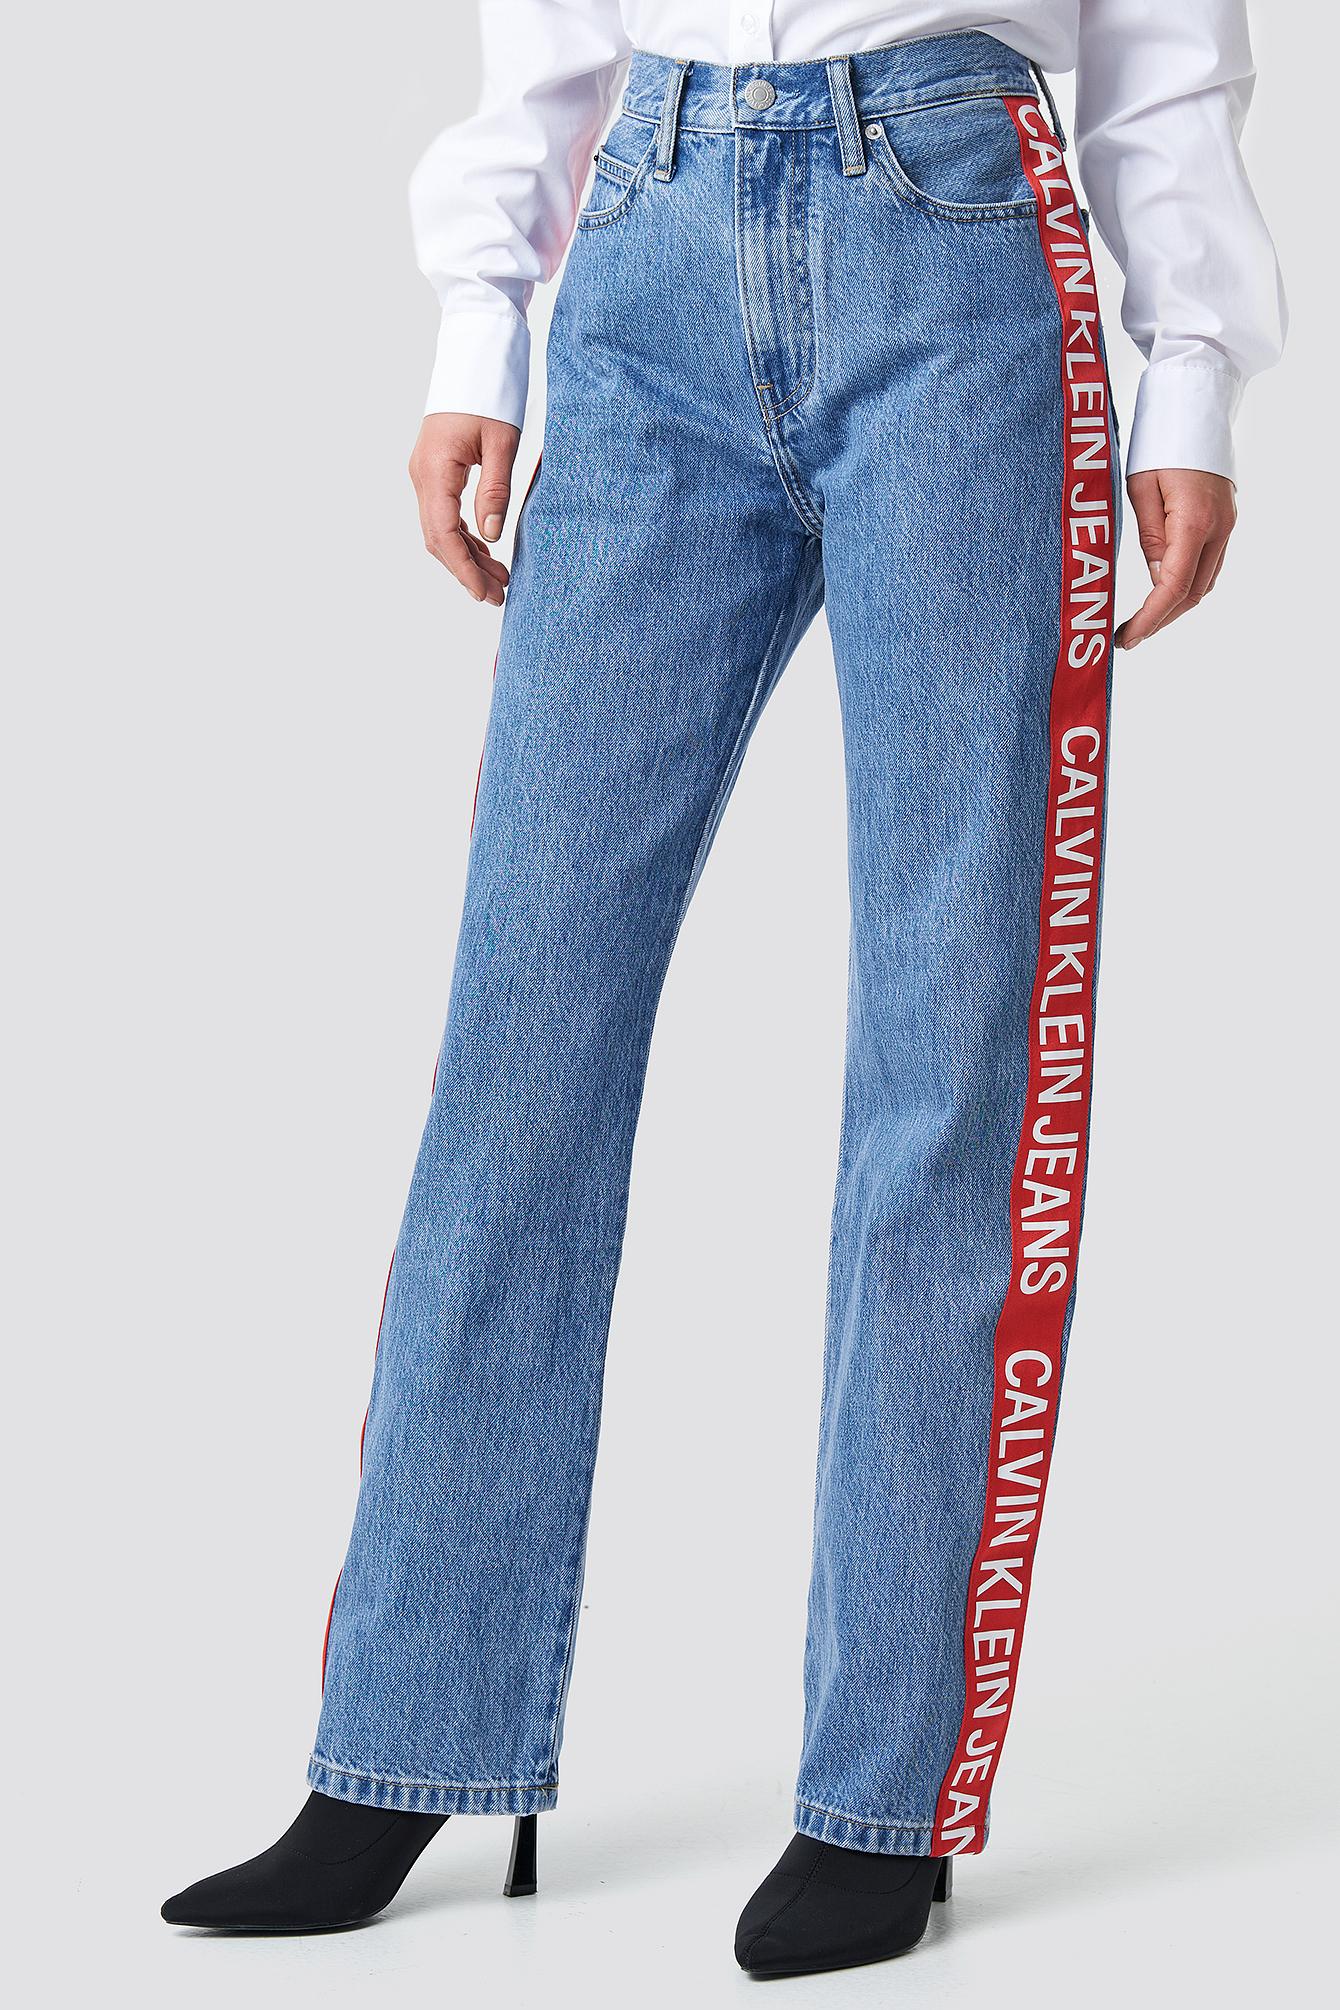 ckj 035 straight taped jeans